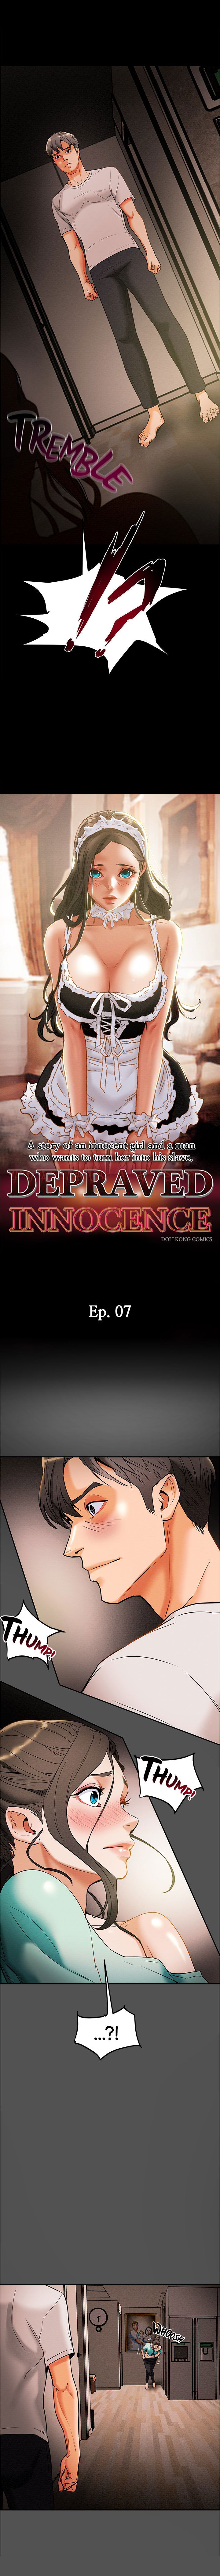 depraved-innocence-chap-7-4